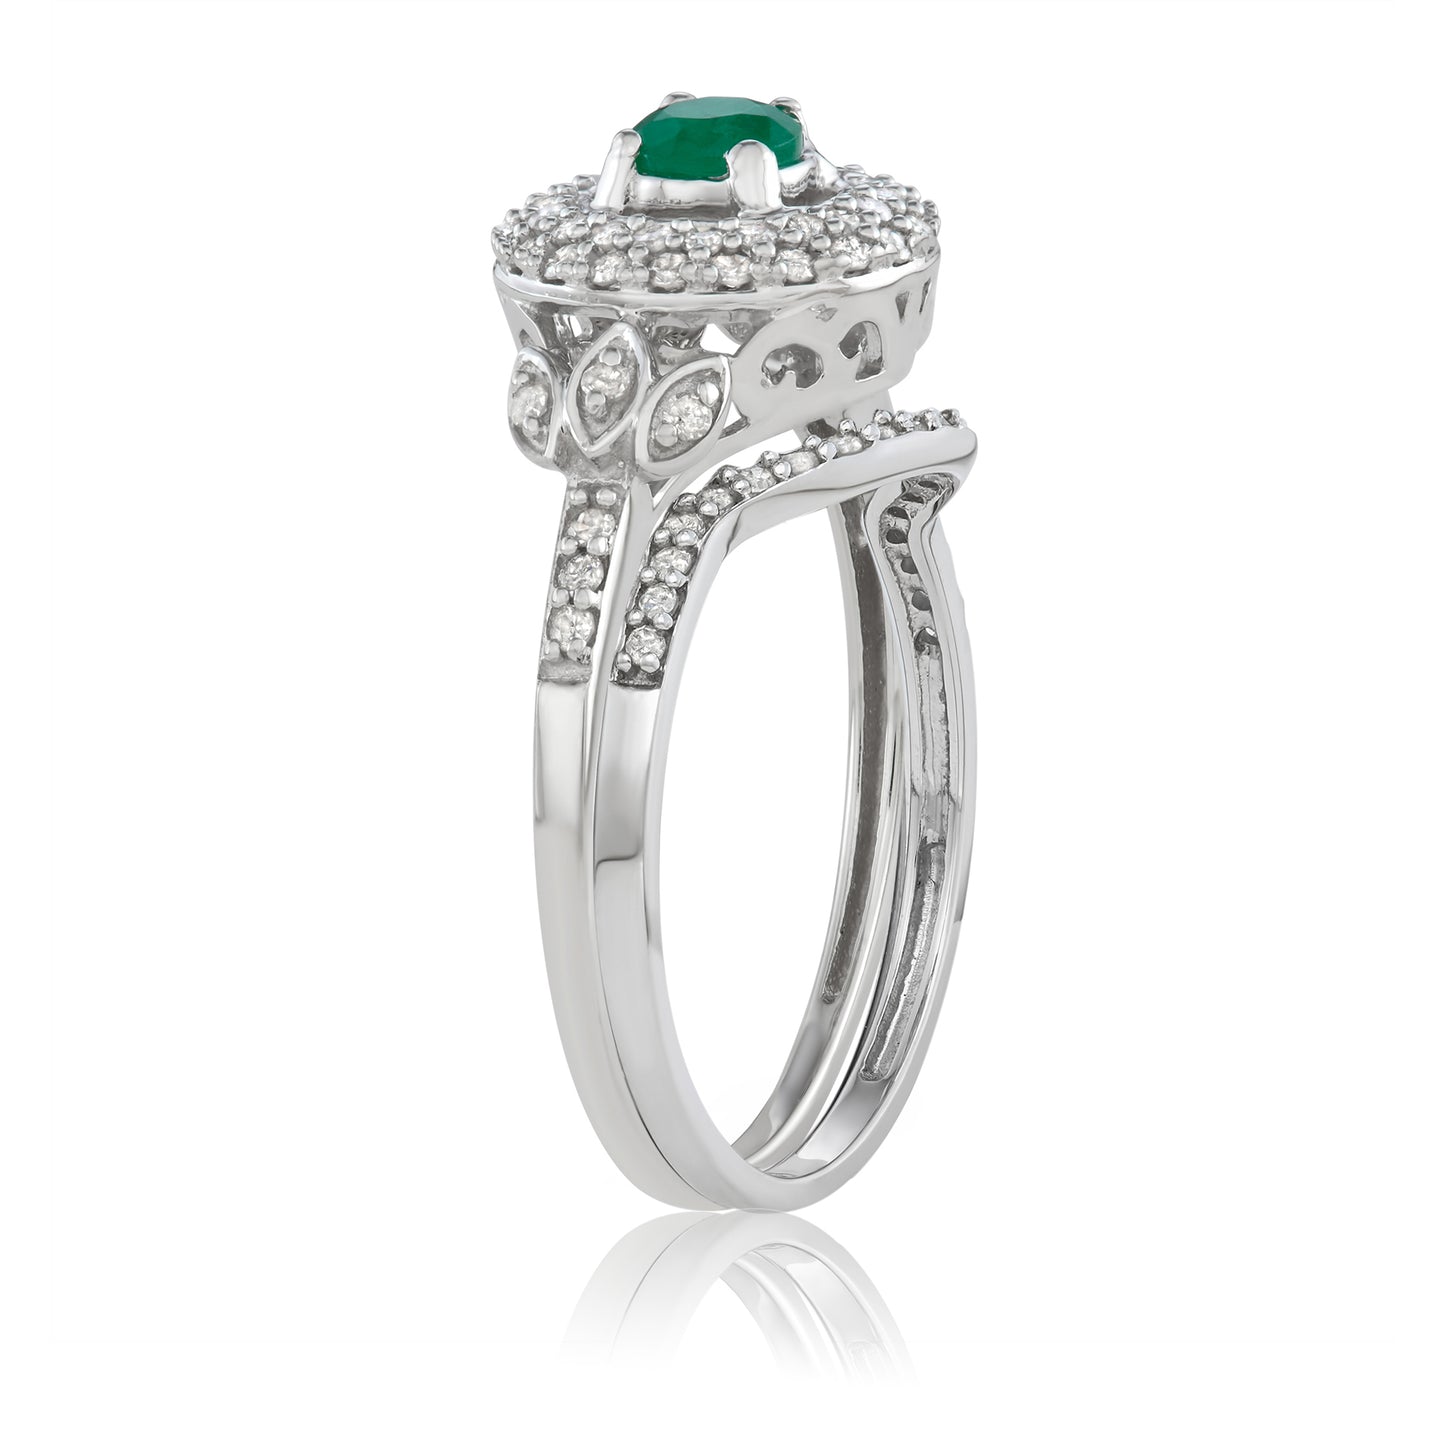 10K White Gold 0.61ct TW Emerald and Diamond Bridal Set